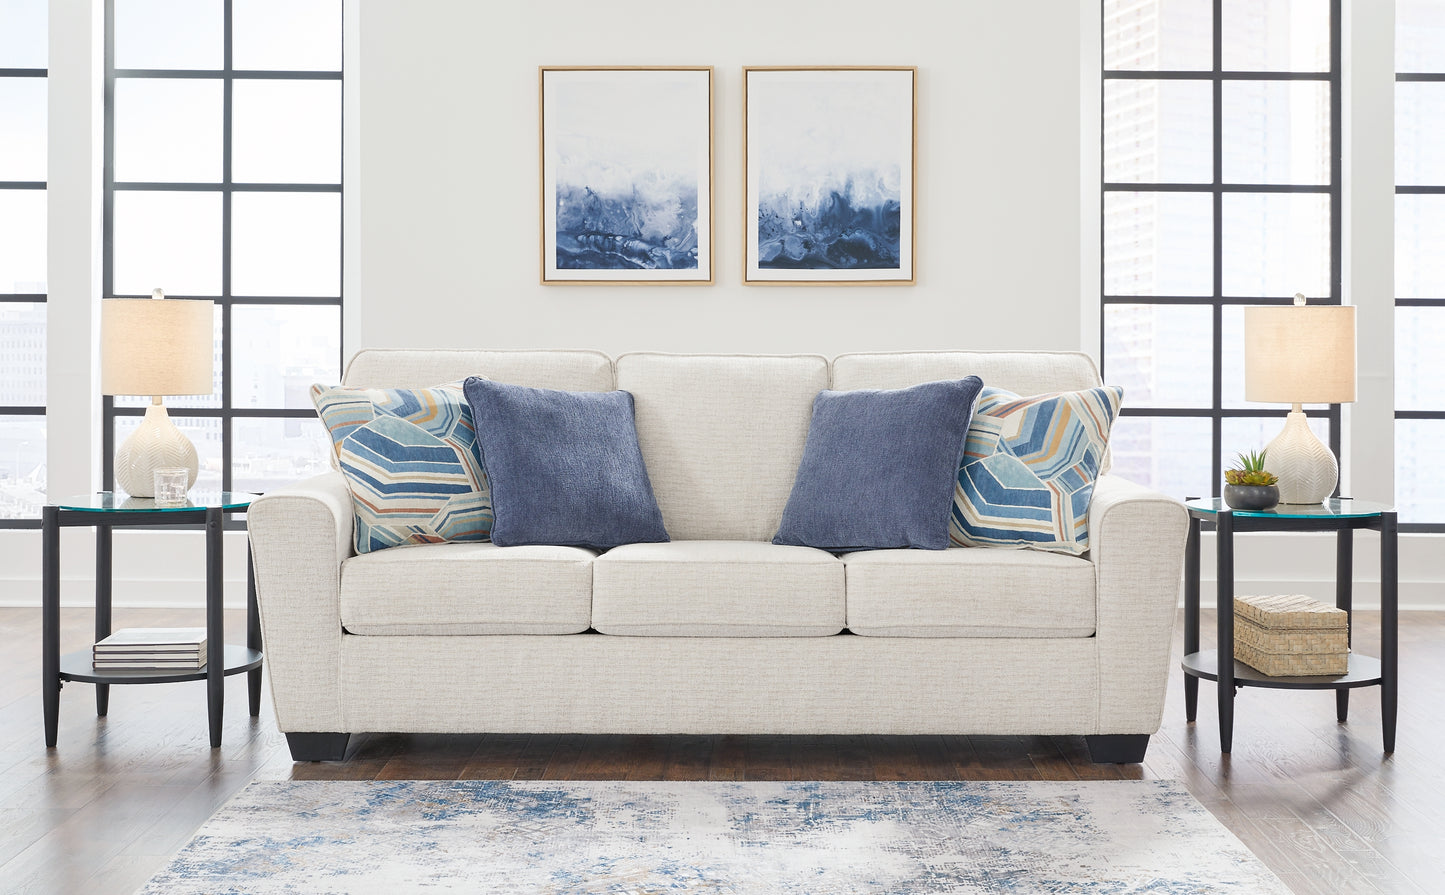 Cashton Queen Sofa Sleeper Signature Design by Ashley®